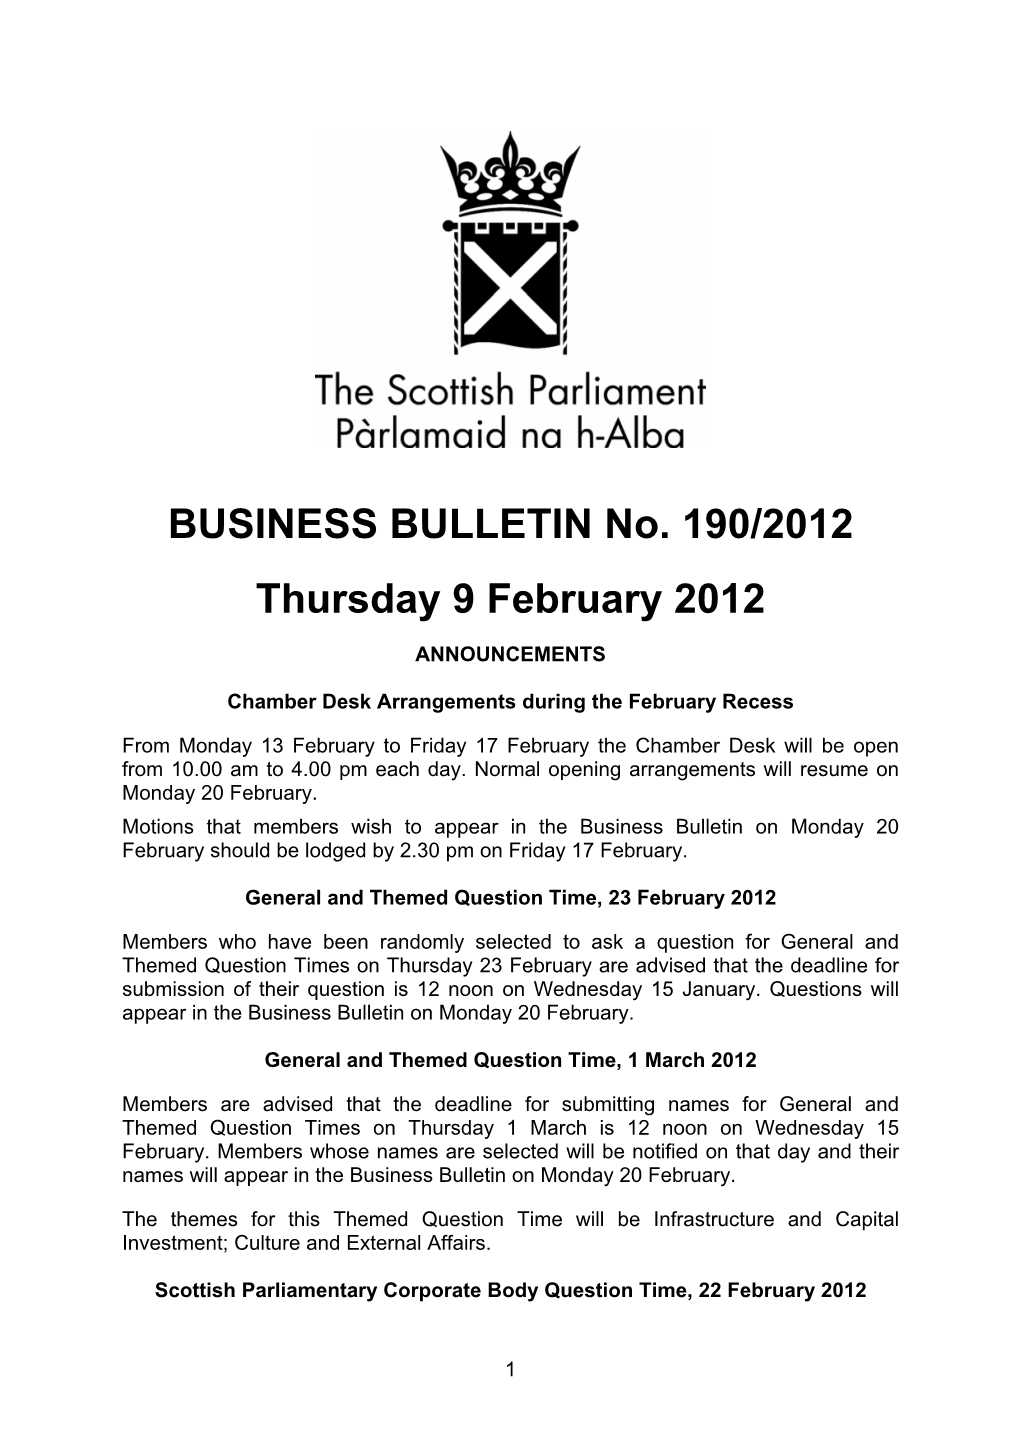 BUSINESS BULLETIN No. 190/2012 Thursday 9 February 2012